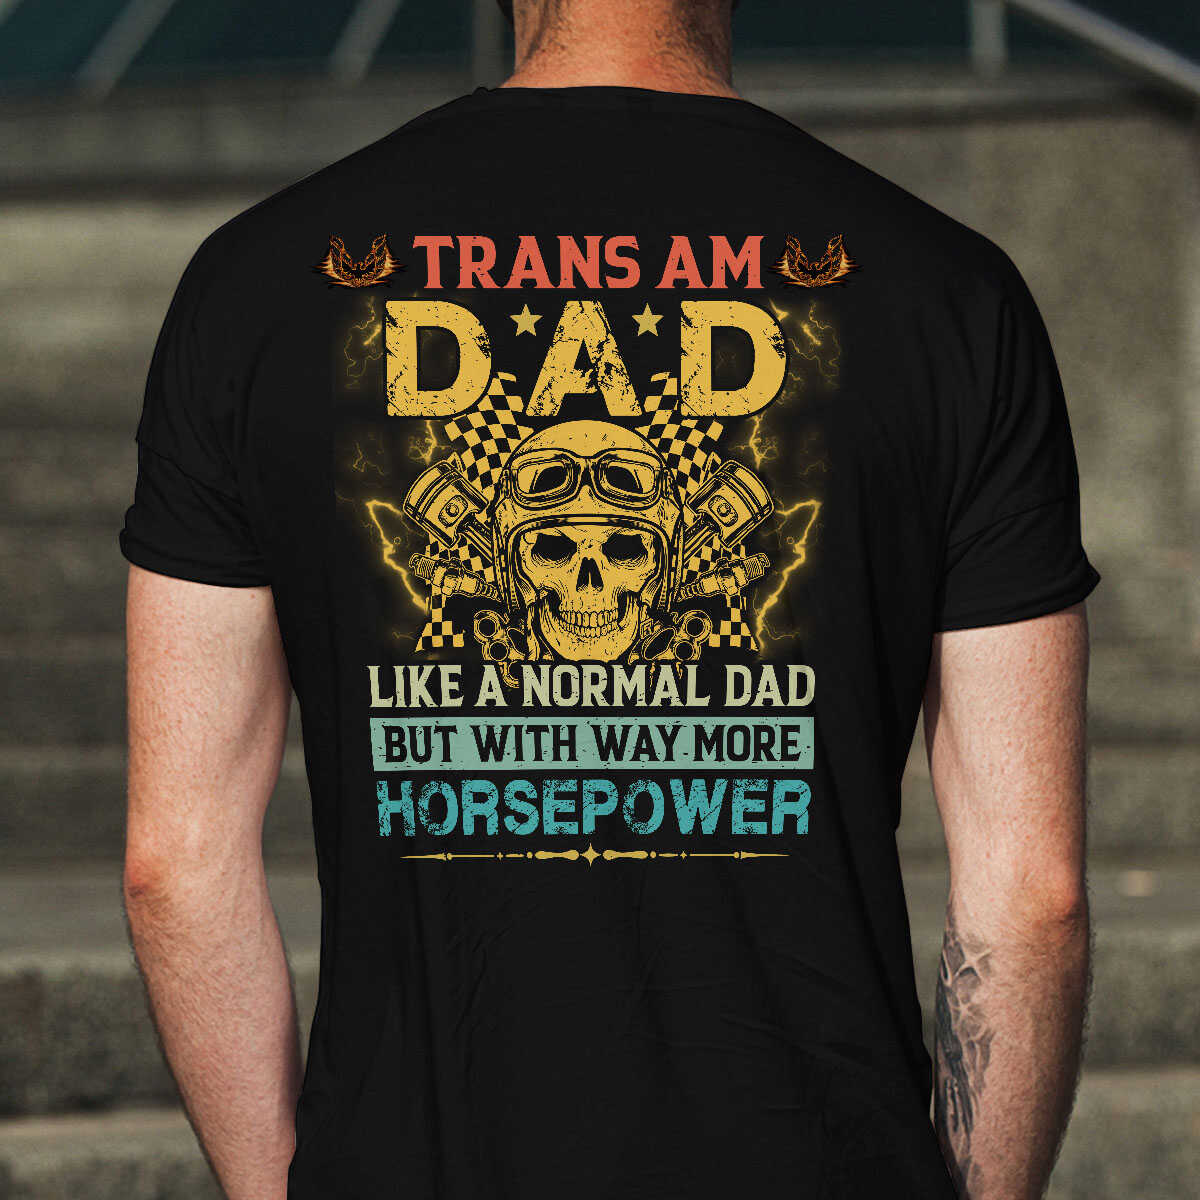 Trans Am Dad T-shirt - Trans Am Dad Has Way More Horsepower